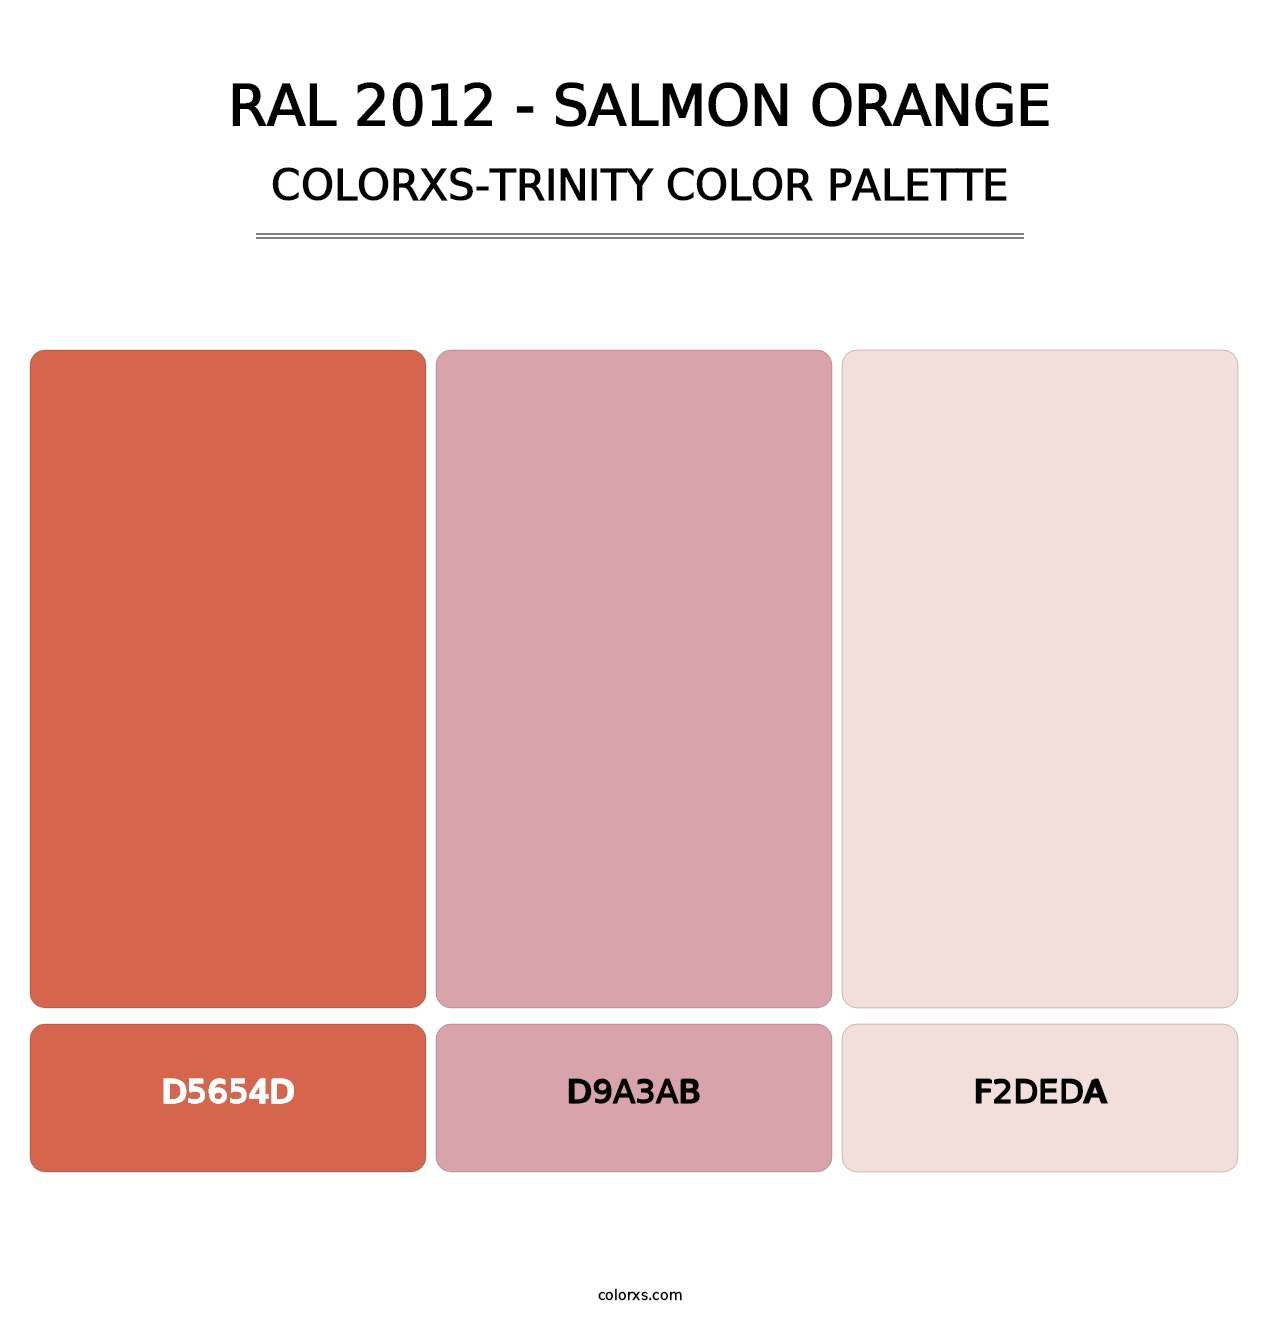 RAL 2012 - Salmon Orange - Colorxs Trinity Palette